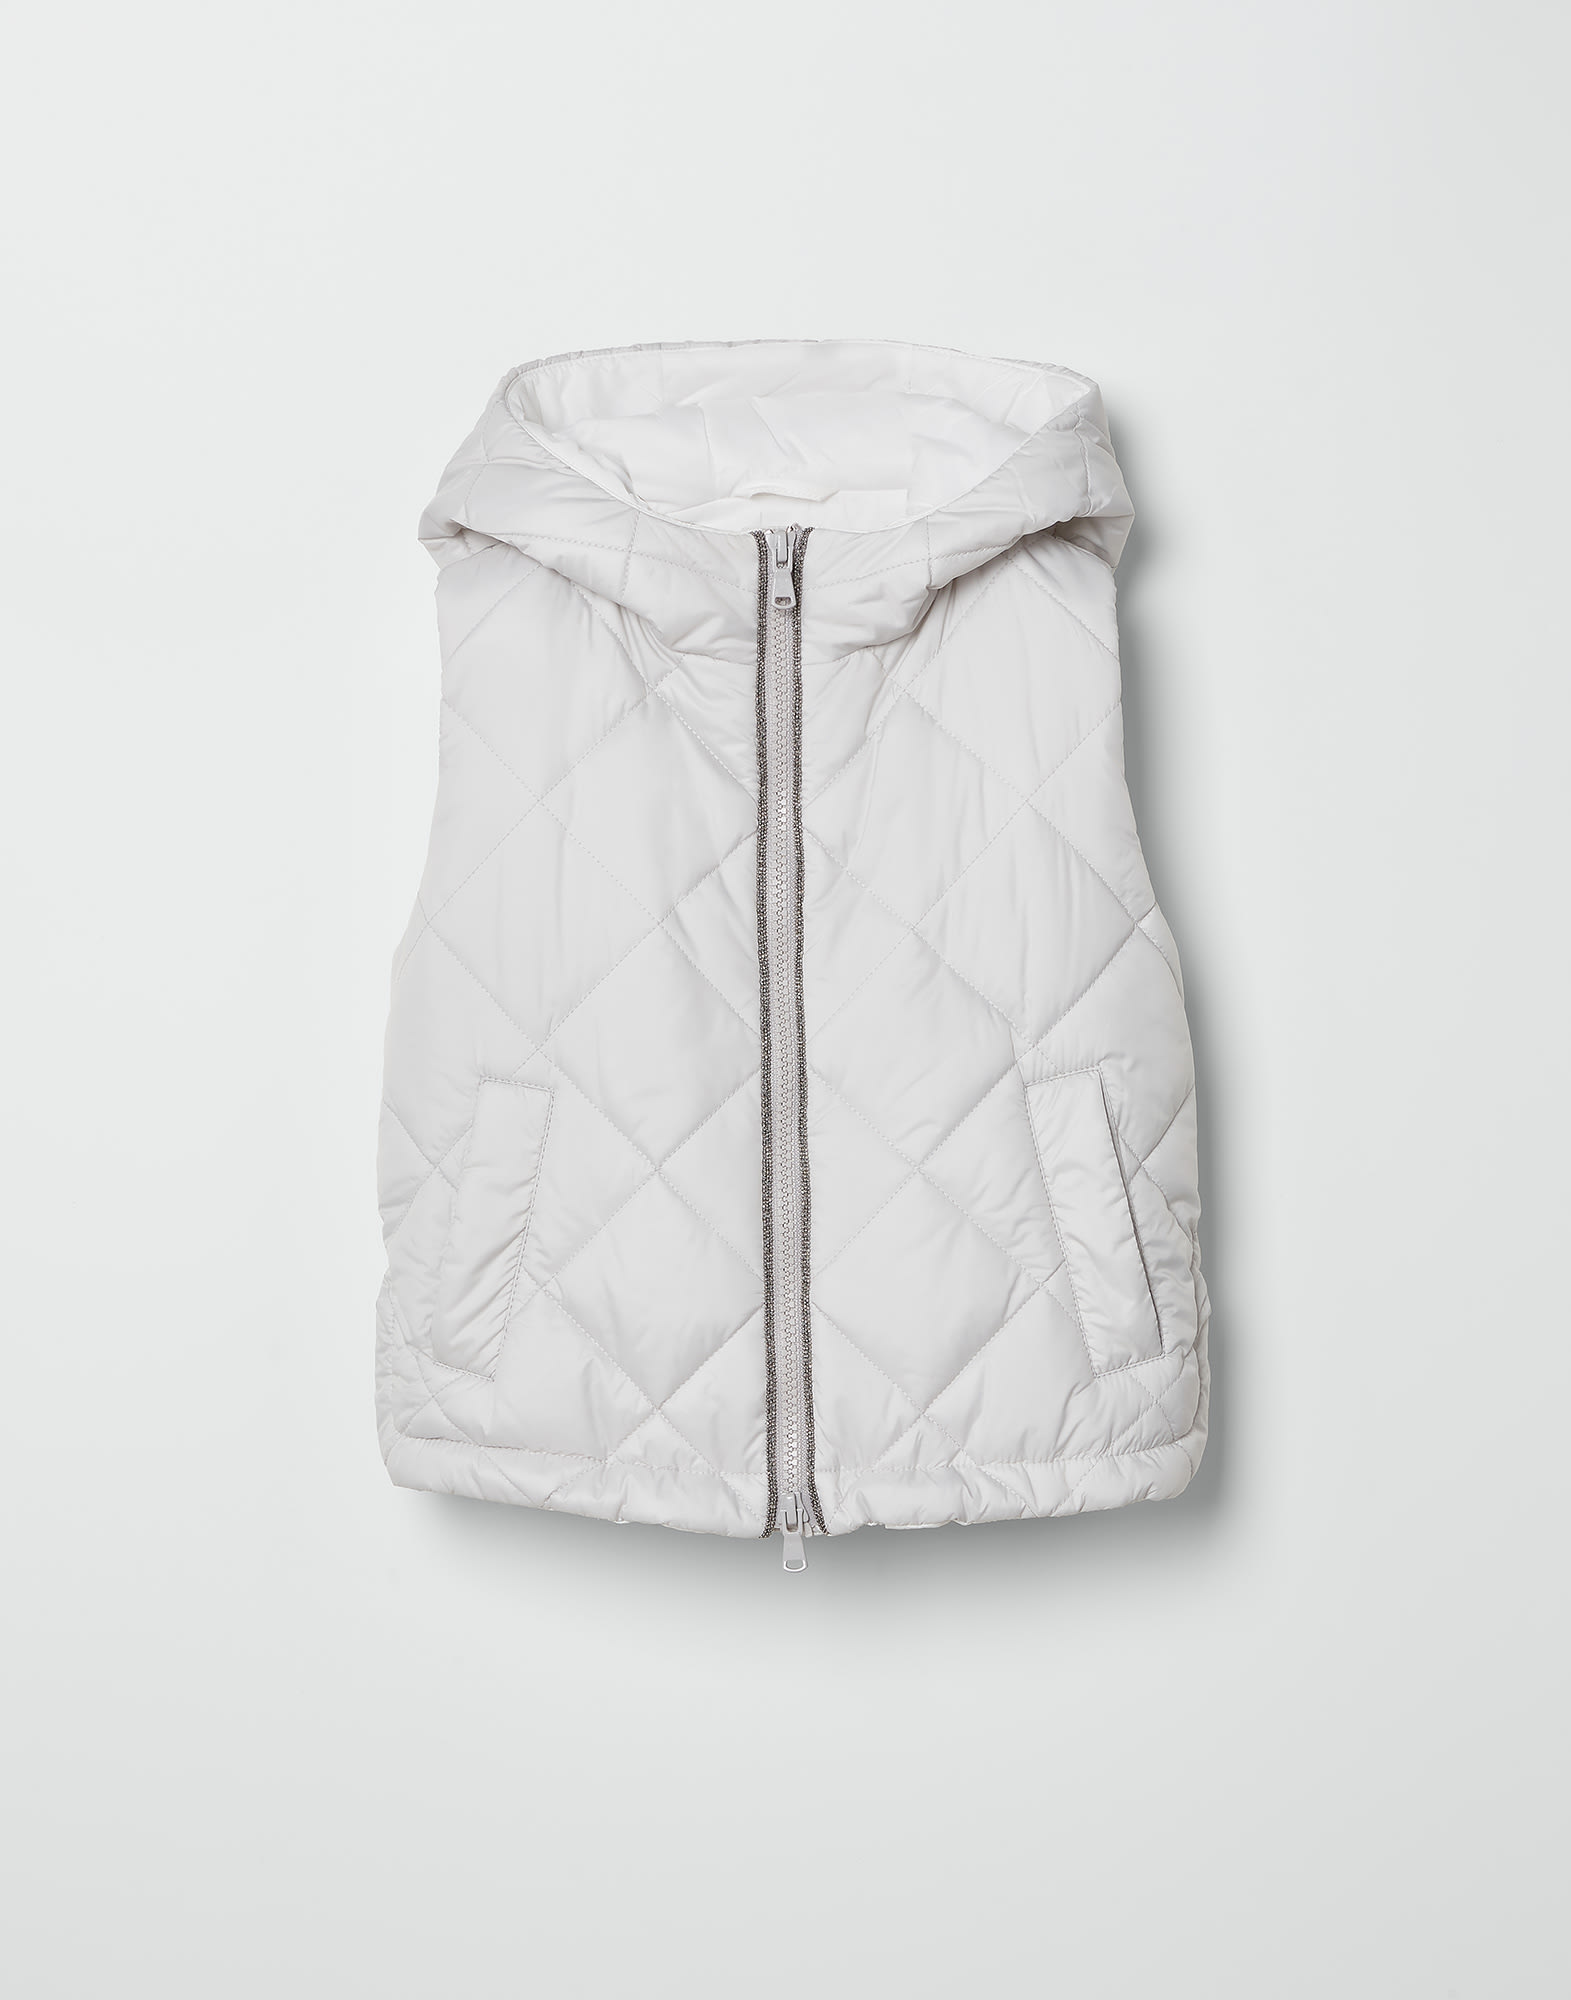 Nylon vest with padding